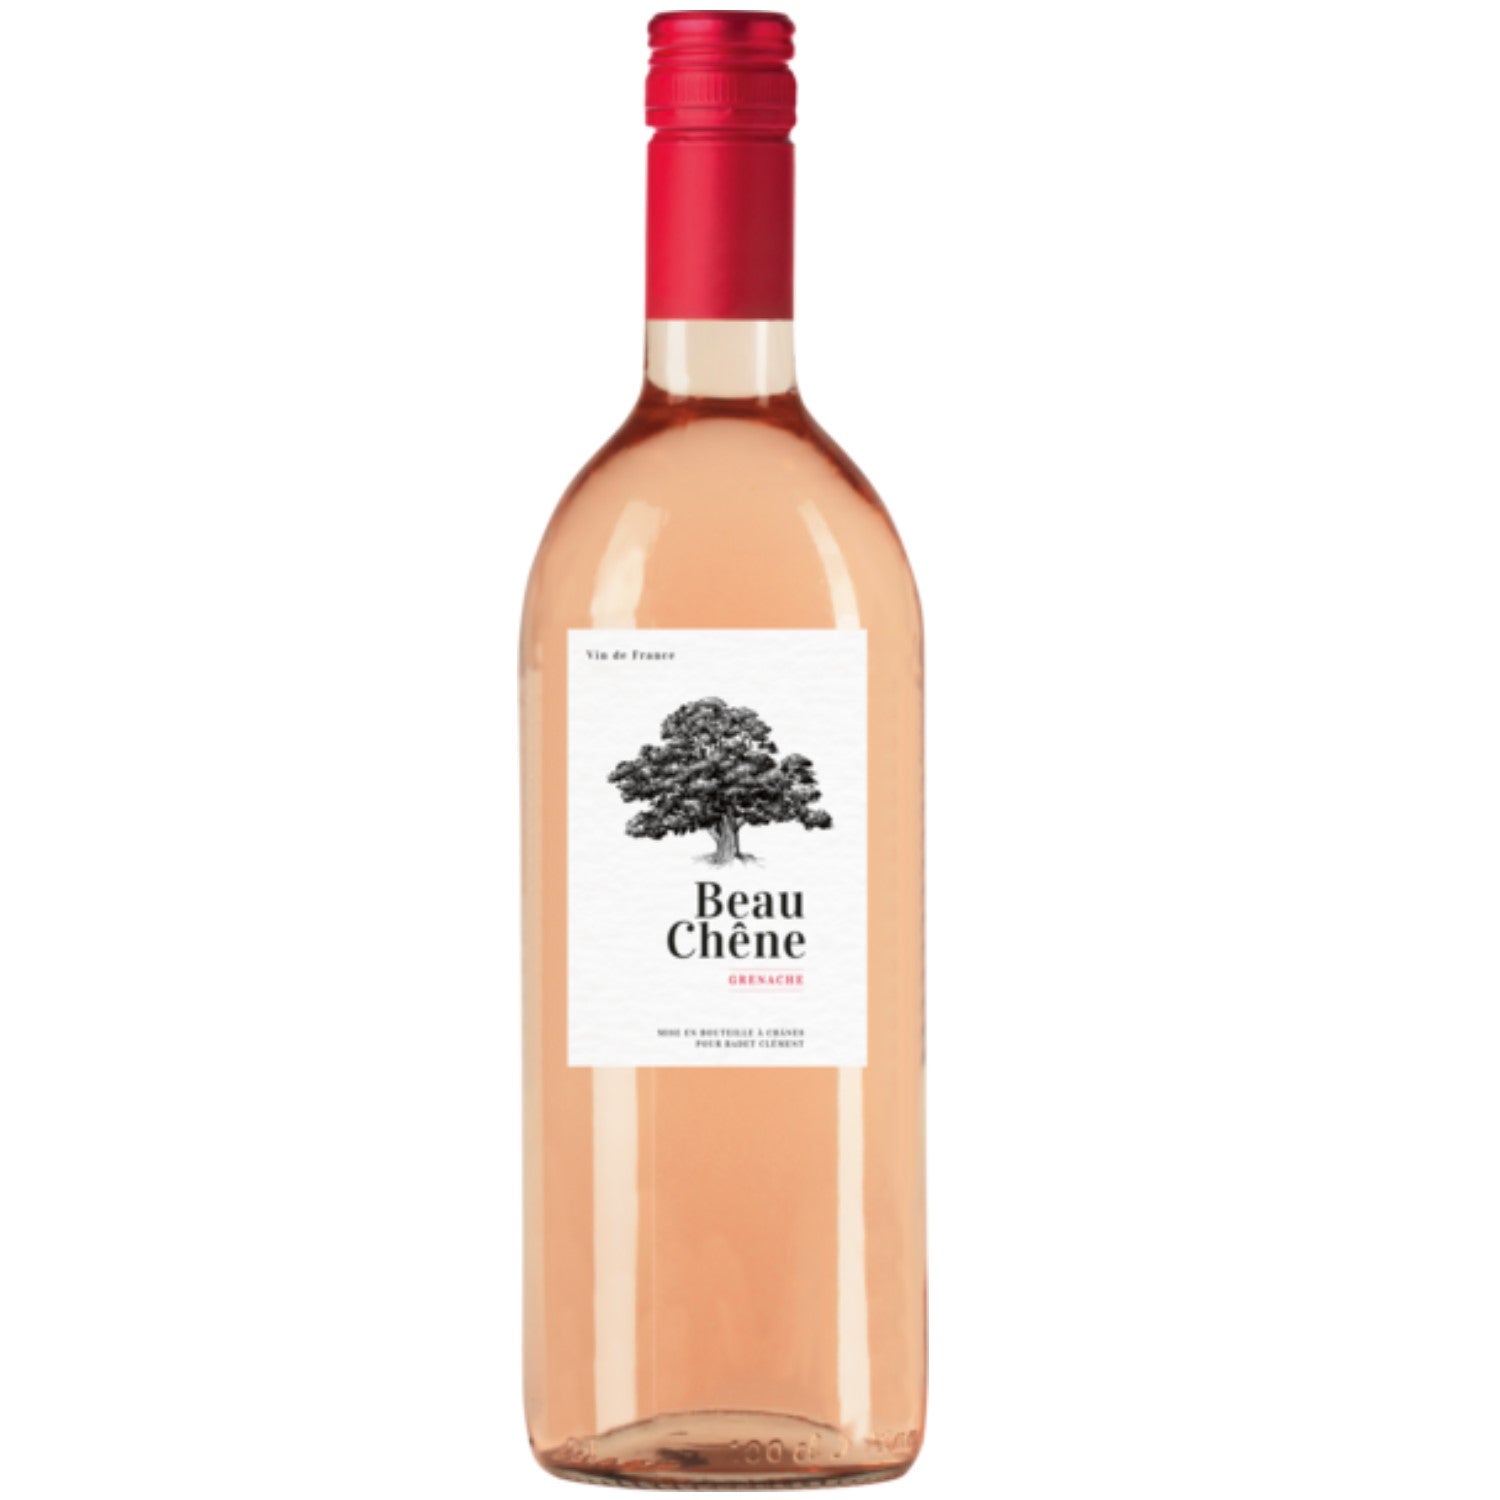 Beau Chêne Grenache Rosé Vin de France Roséwein Wein trocken Frankreich (3 x 0.75l) - Versanel -